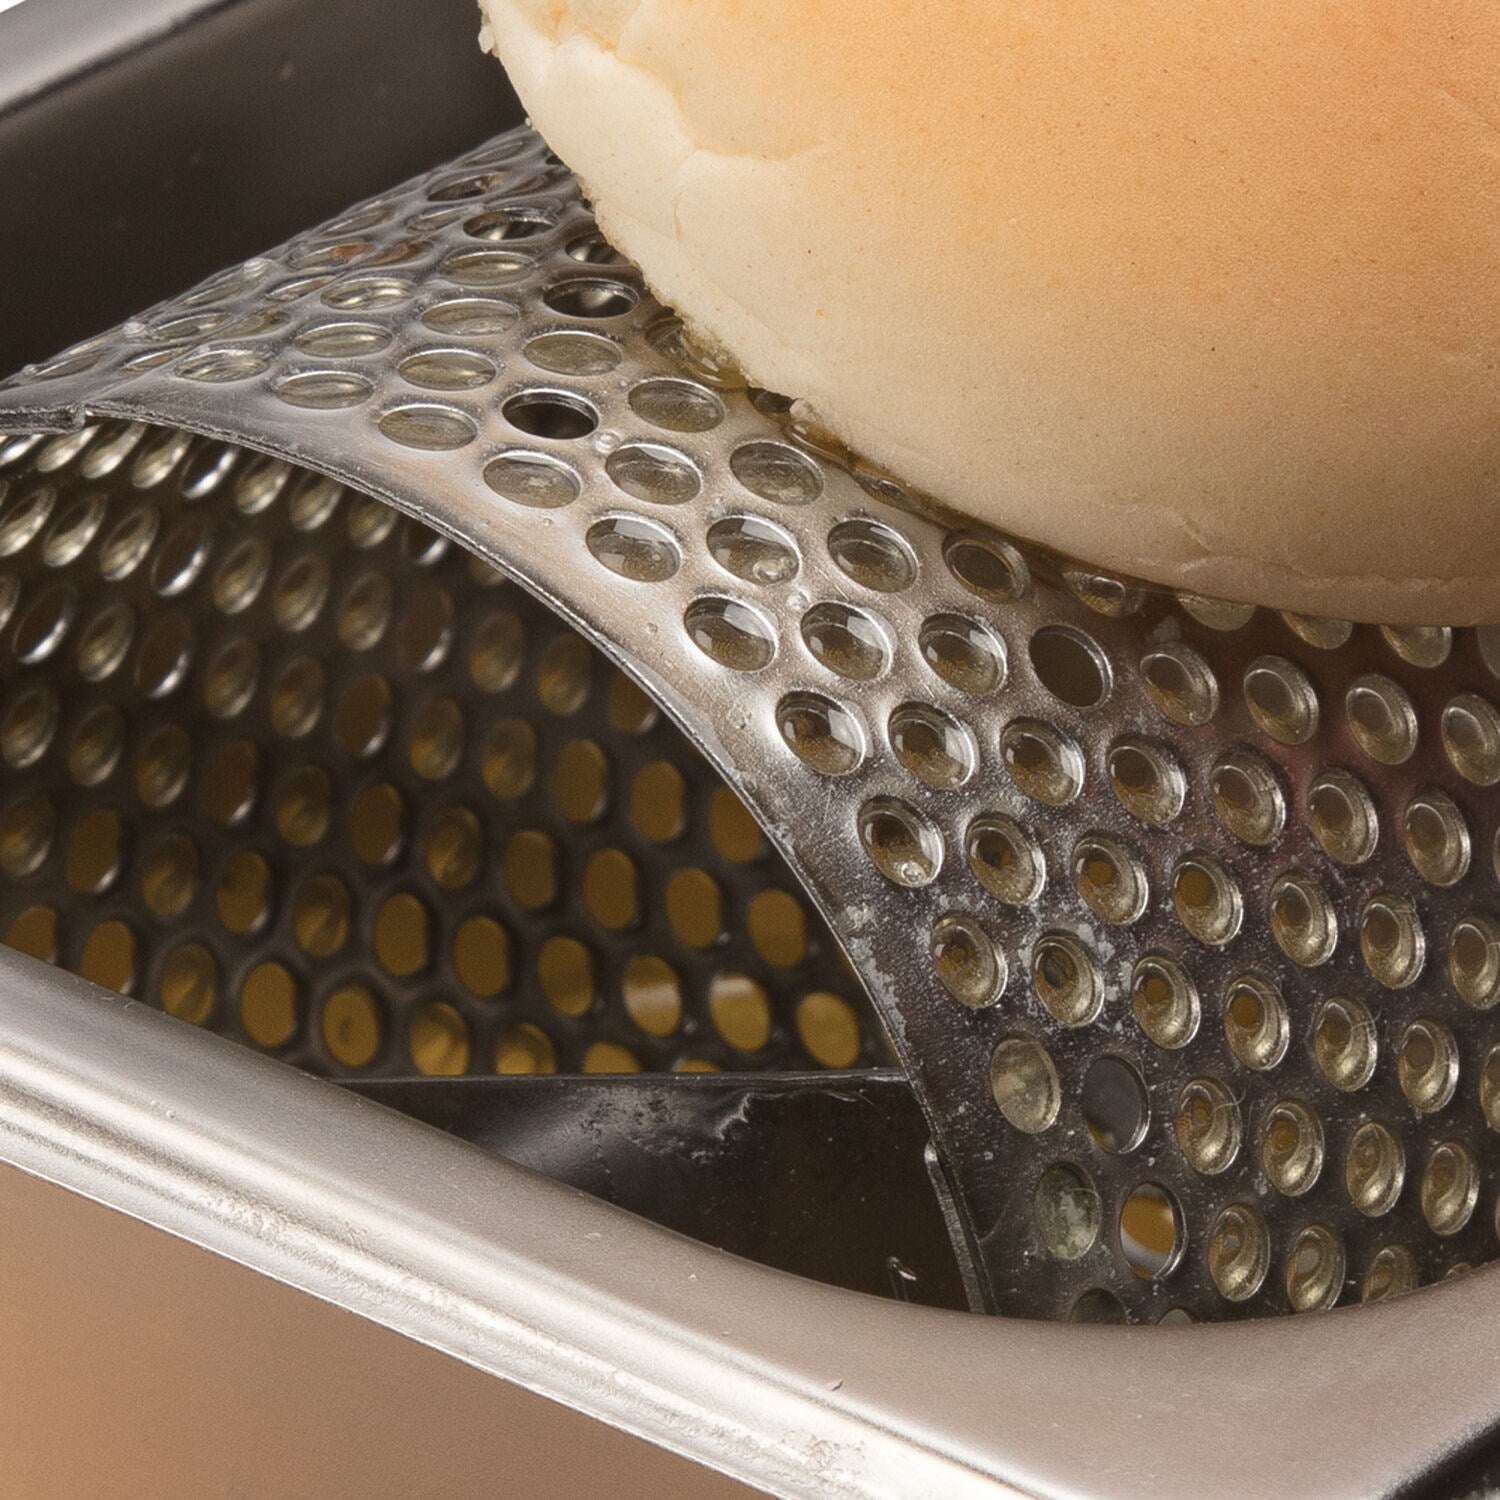 Cuisinart Stainless Steel Butter Wheel for Bread, Buns, or Rolls